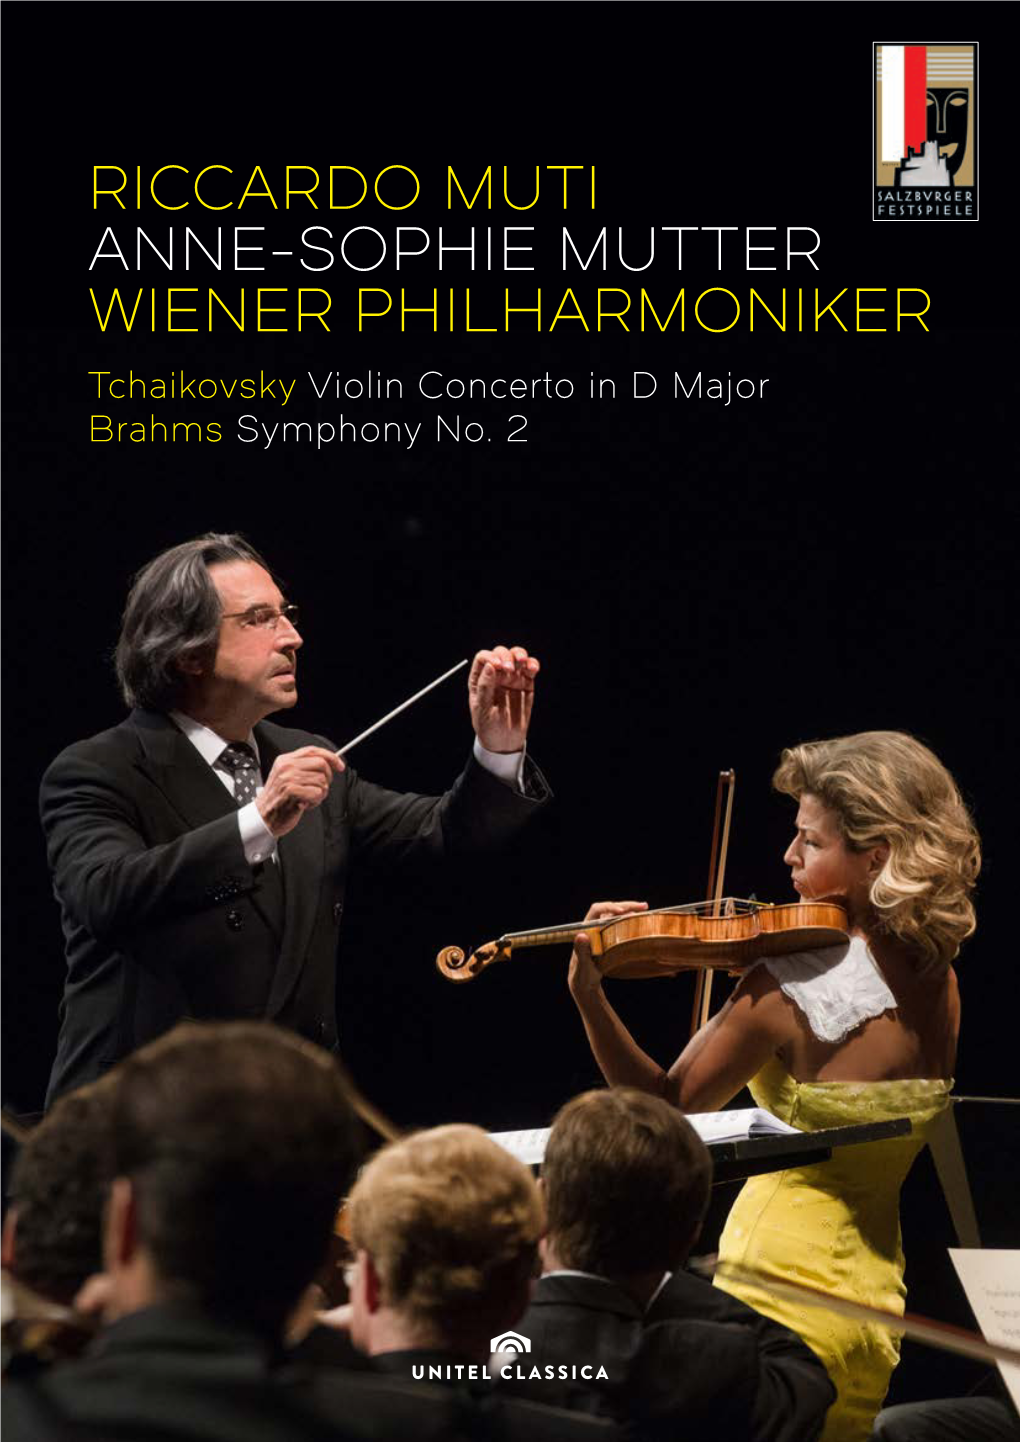 Riccardo Muti Anne-Sophie Mutter Wiener Philharmoniker Tchaikovsky Violin Concerto in D Major Brahms Symphony No